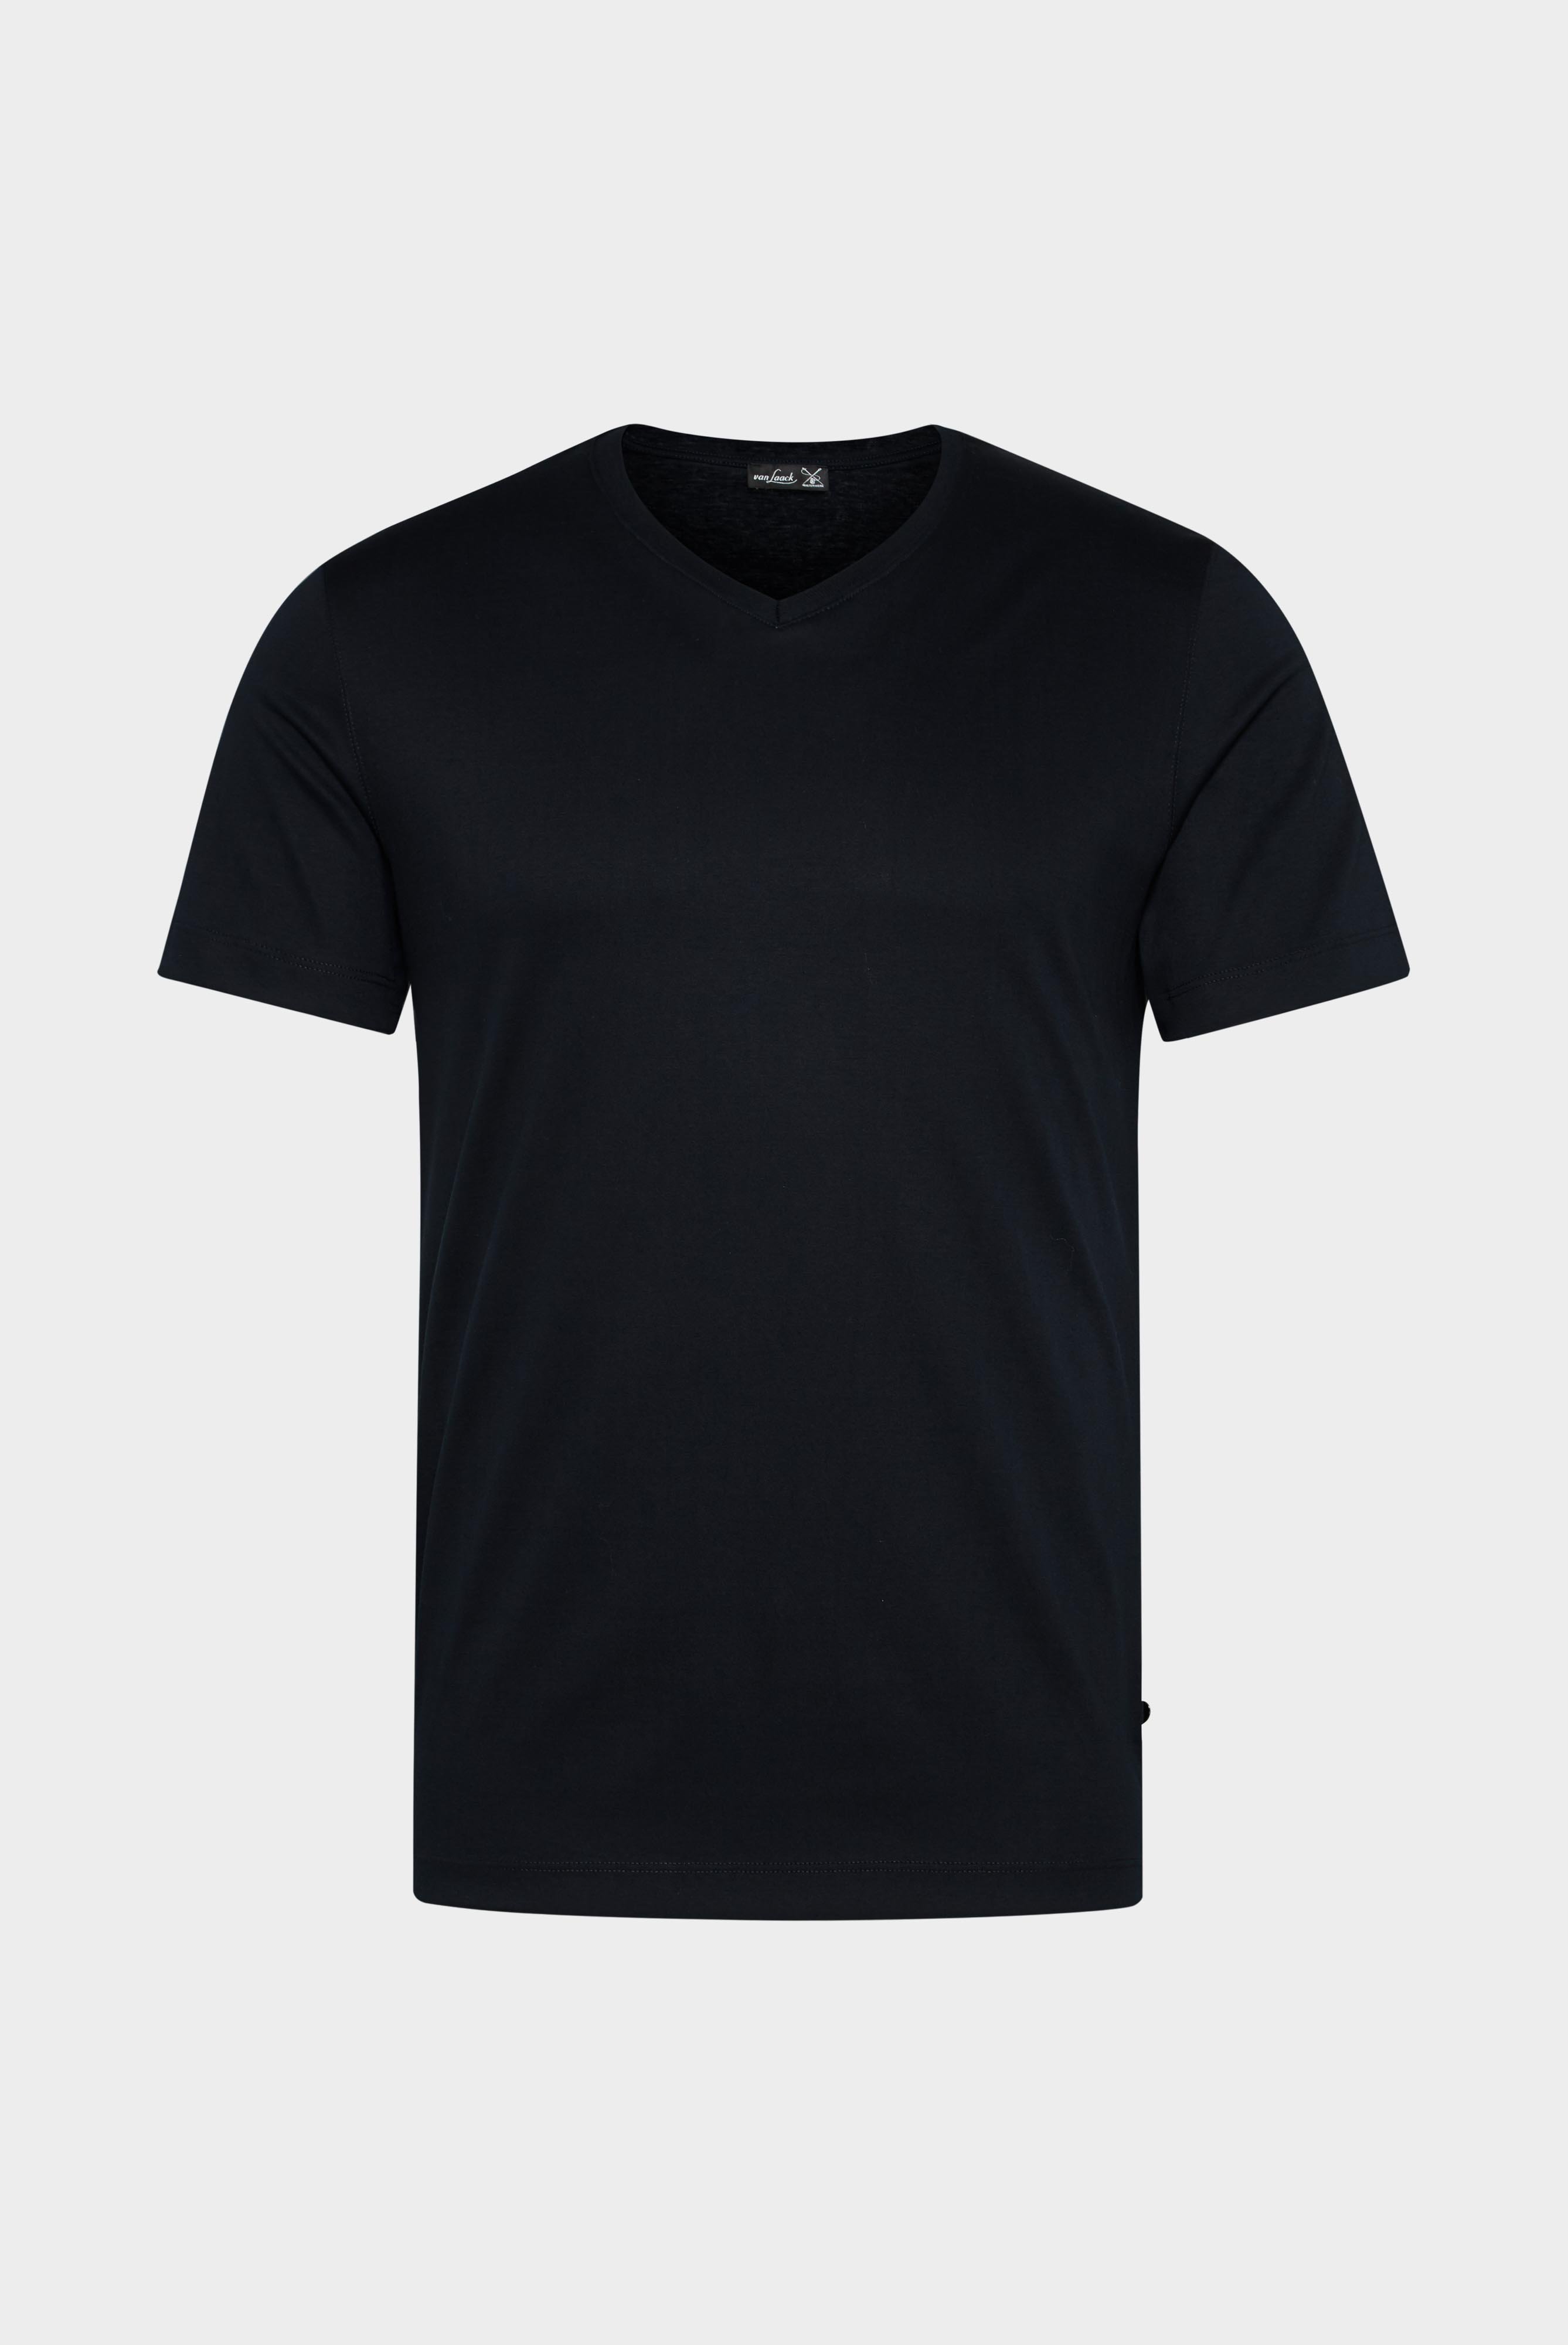 T-Shirts+Swiss Cotton Jersey V-Neck T-Shirt+20.1715.UX.180031.790.S